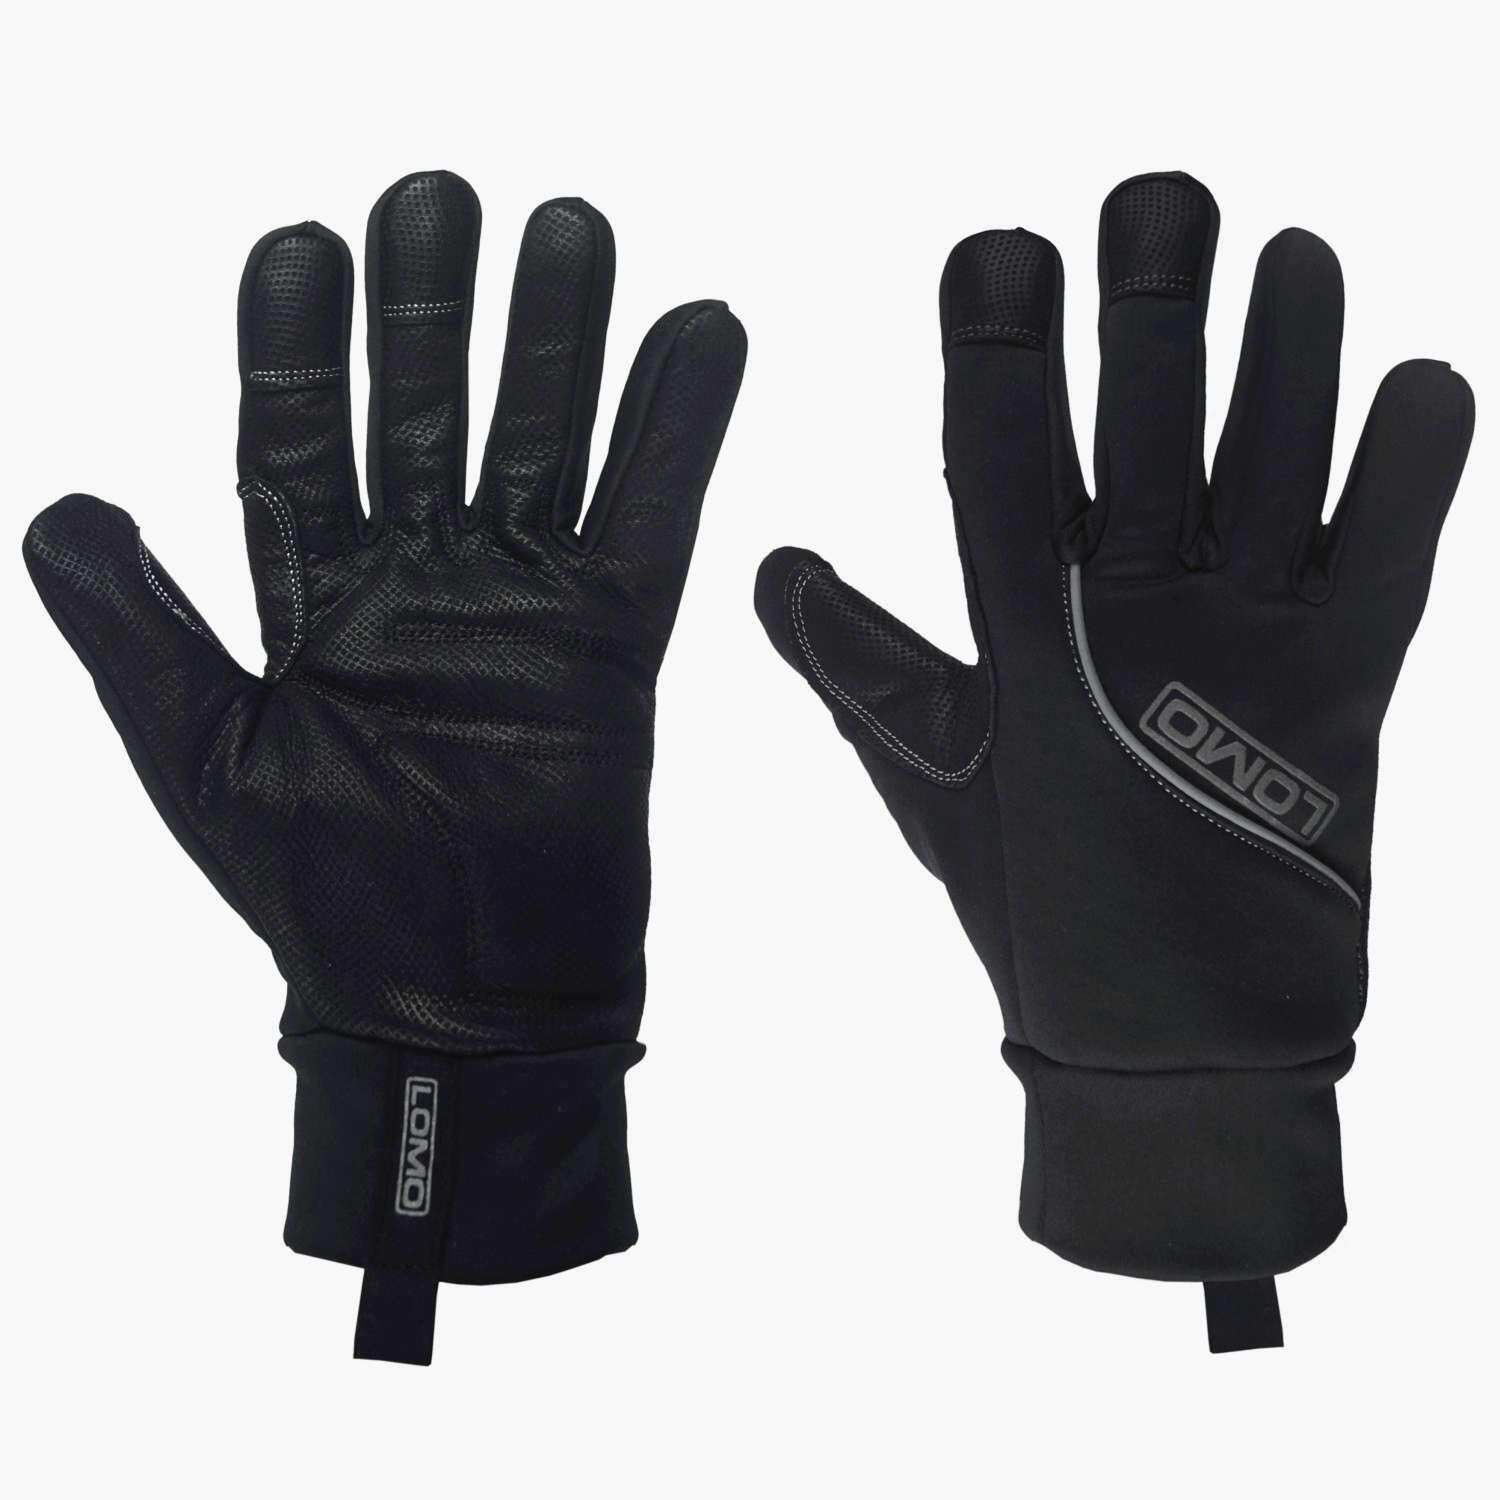 Lomo Winter Mountain Bike Gloves 6/7